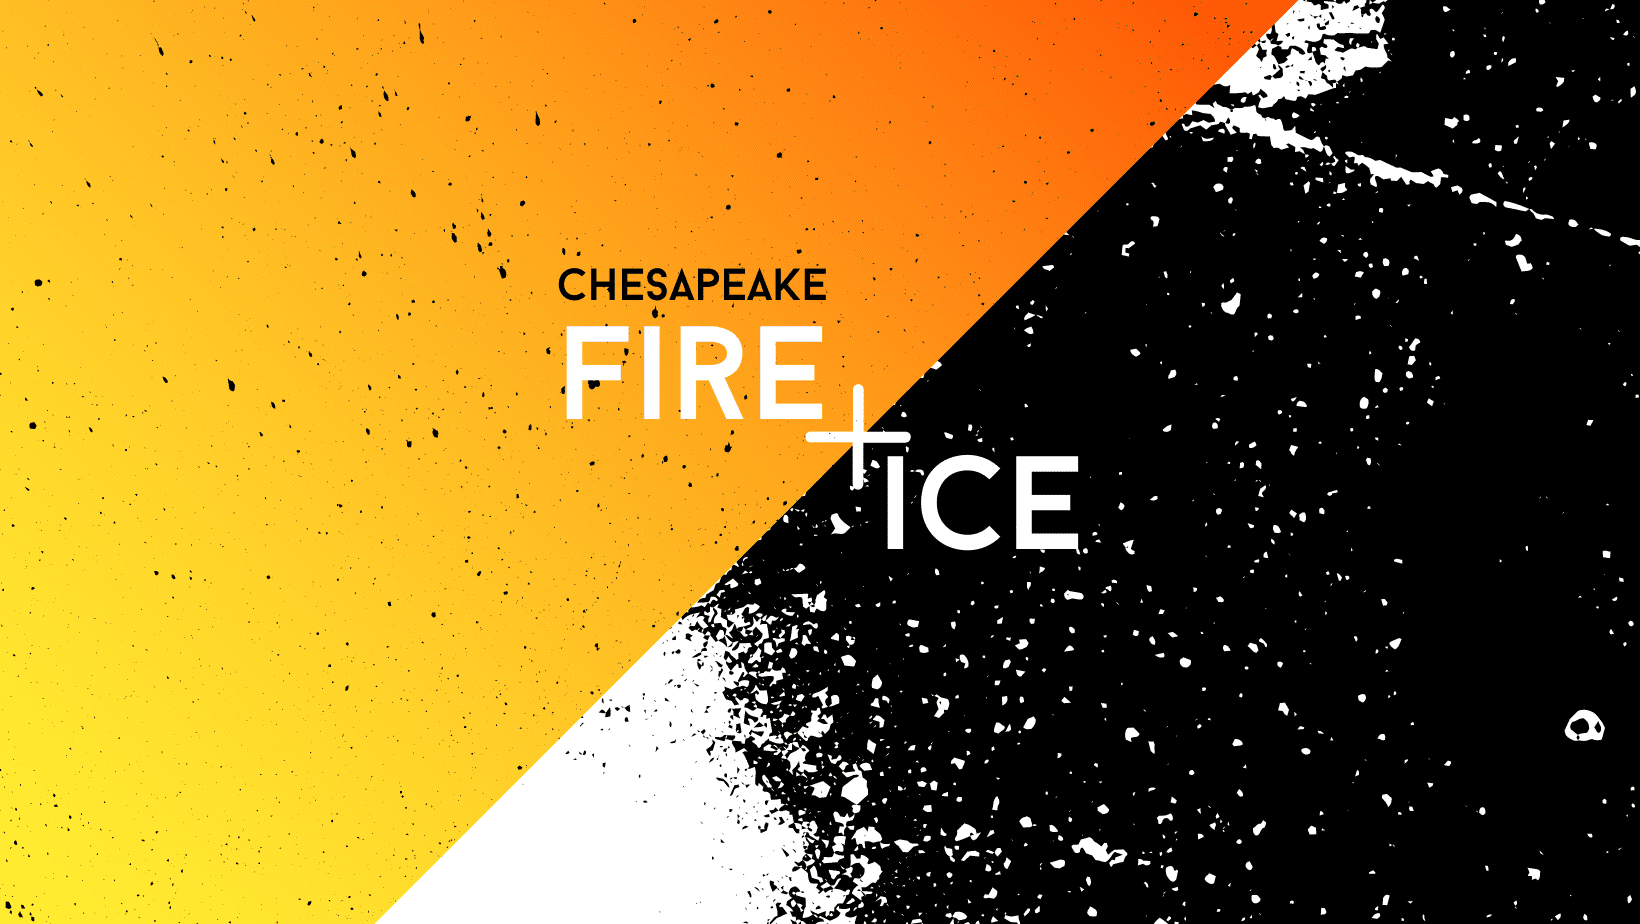 Chesapeake fire & ice (4)